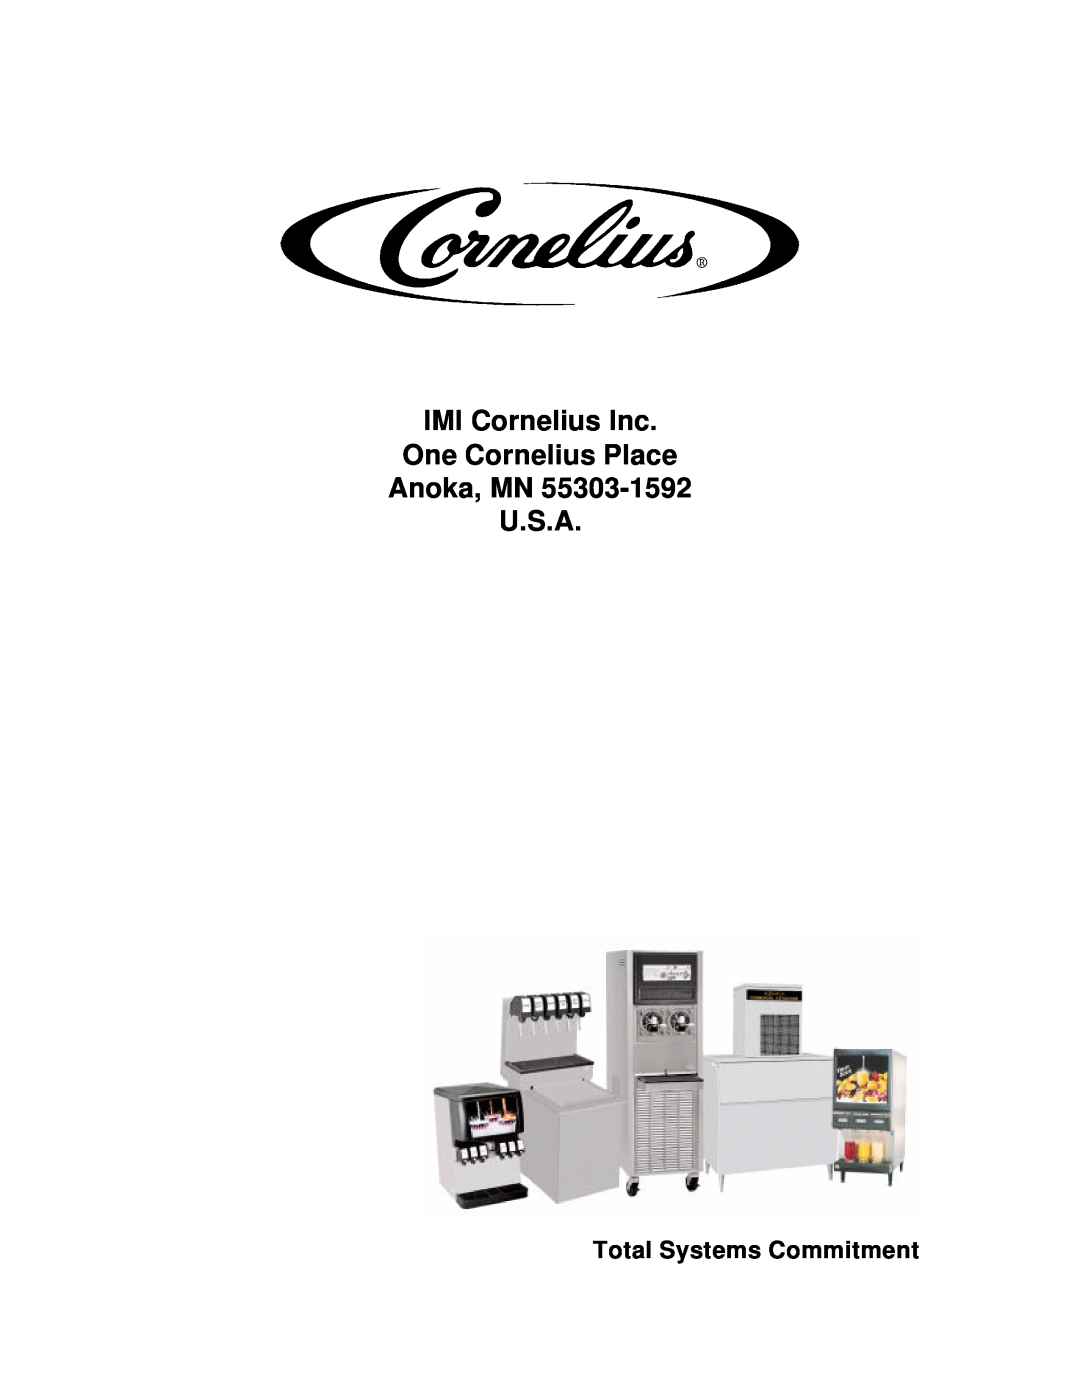 Cornelius QUANTUM SERIES service manual IMI Cornelius Inc One Cornelius Place Anoka, MN U.S.A, Total Systems Commitment 